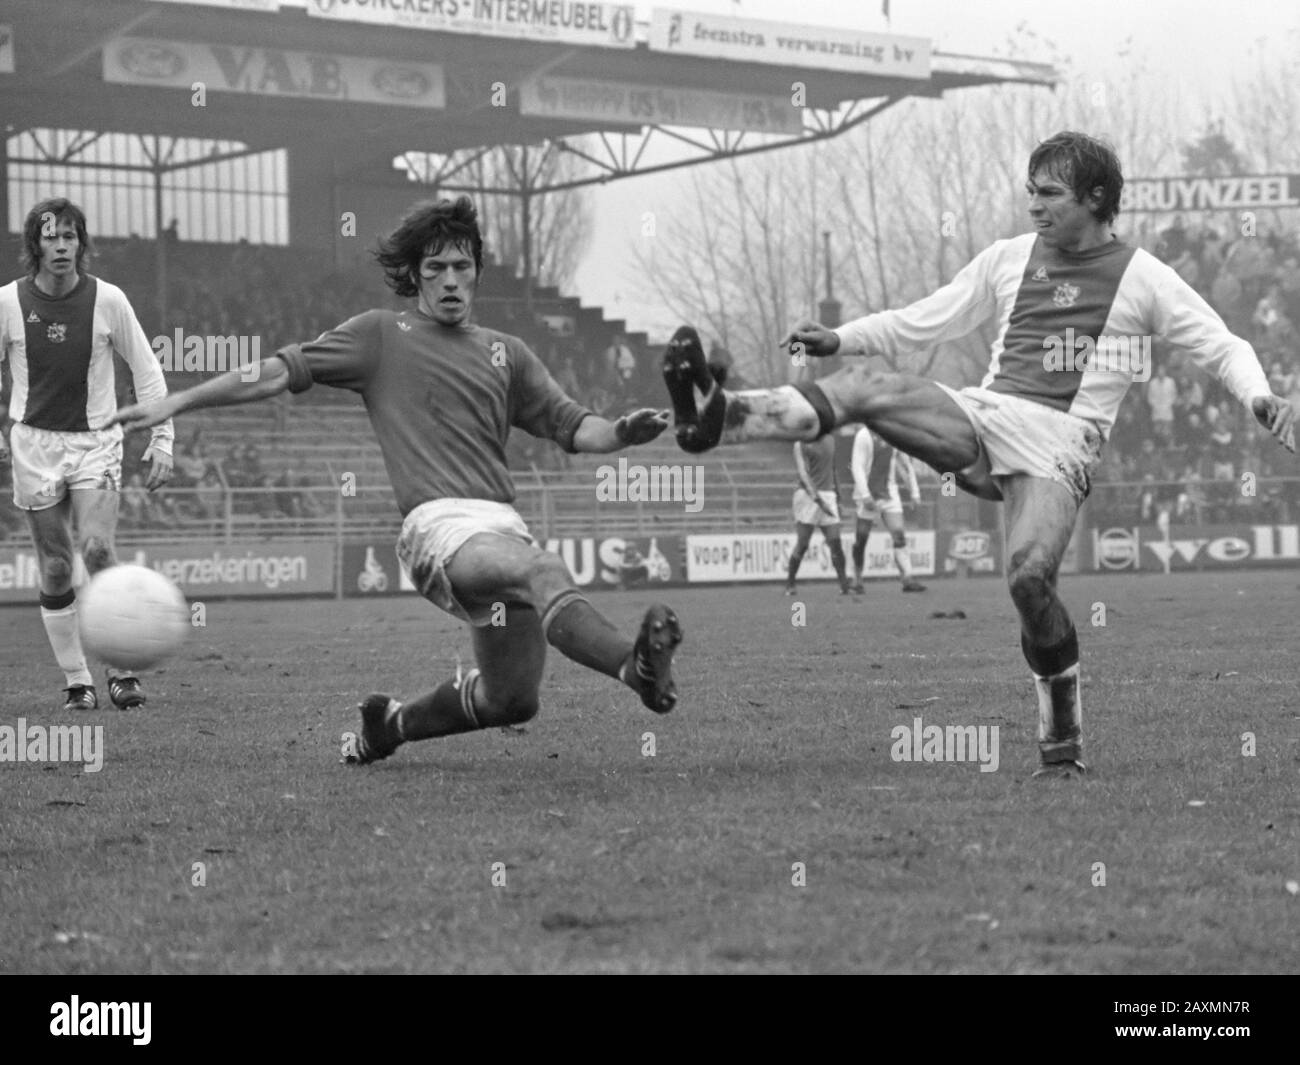 Ajax against Go Ahead Eagles 3-0, Jan Mulder (right) scores November 3, 1974 Stock Photo